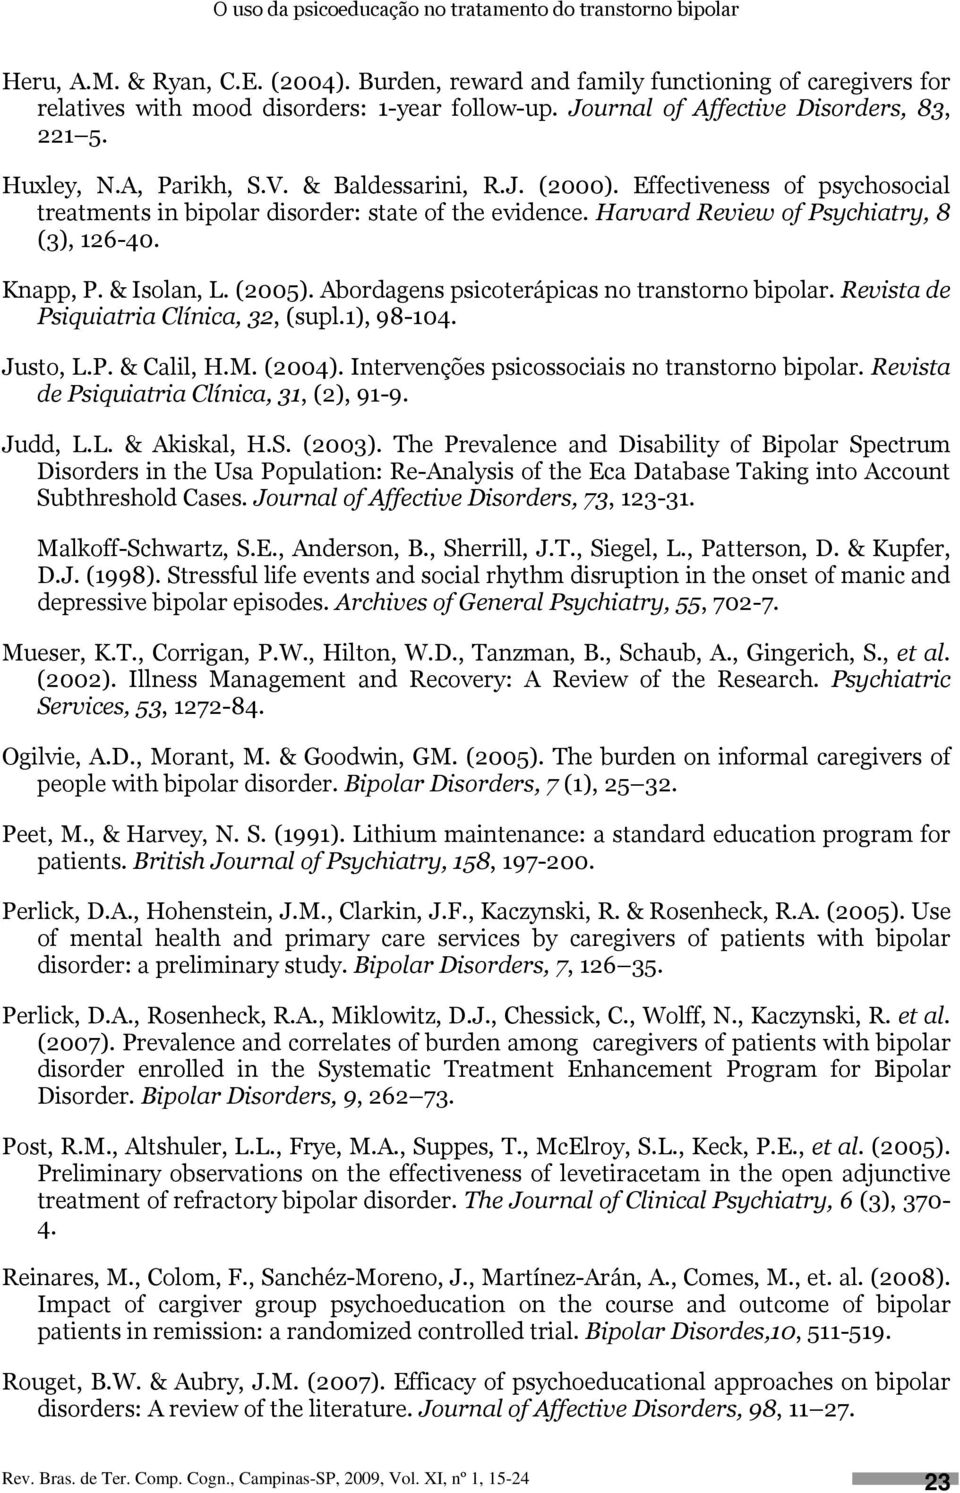 Harvard Review of Psychiatry, 8 (3), 126-40. Knapp, P. & Isolan, L. (2005). Abordagens psicoterápicas no transtorno bipolar. Revista de Psiquiatria Clínica, 32, (supl.1), 98-104. Justo, L.P. & Calil, H.